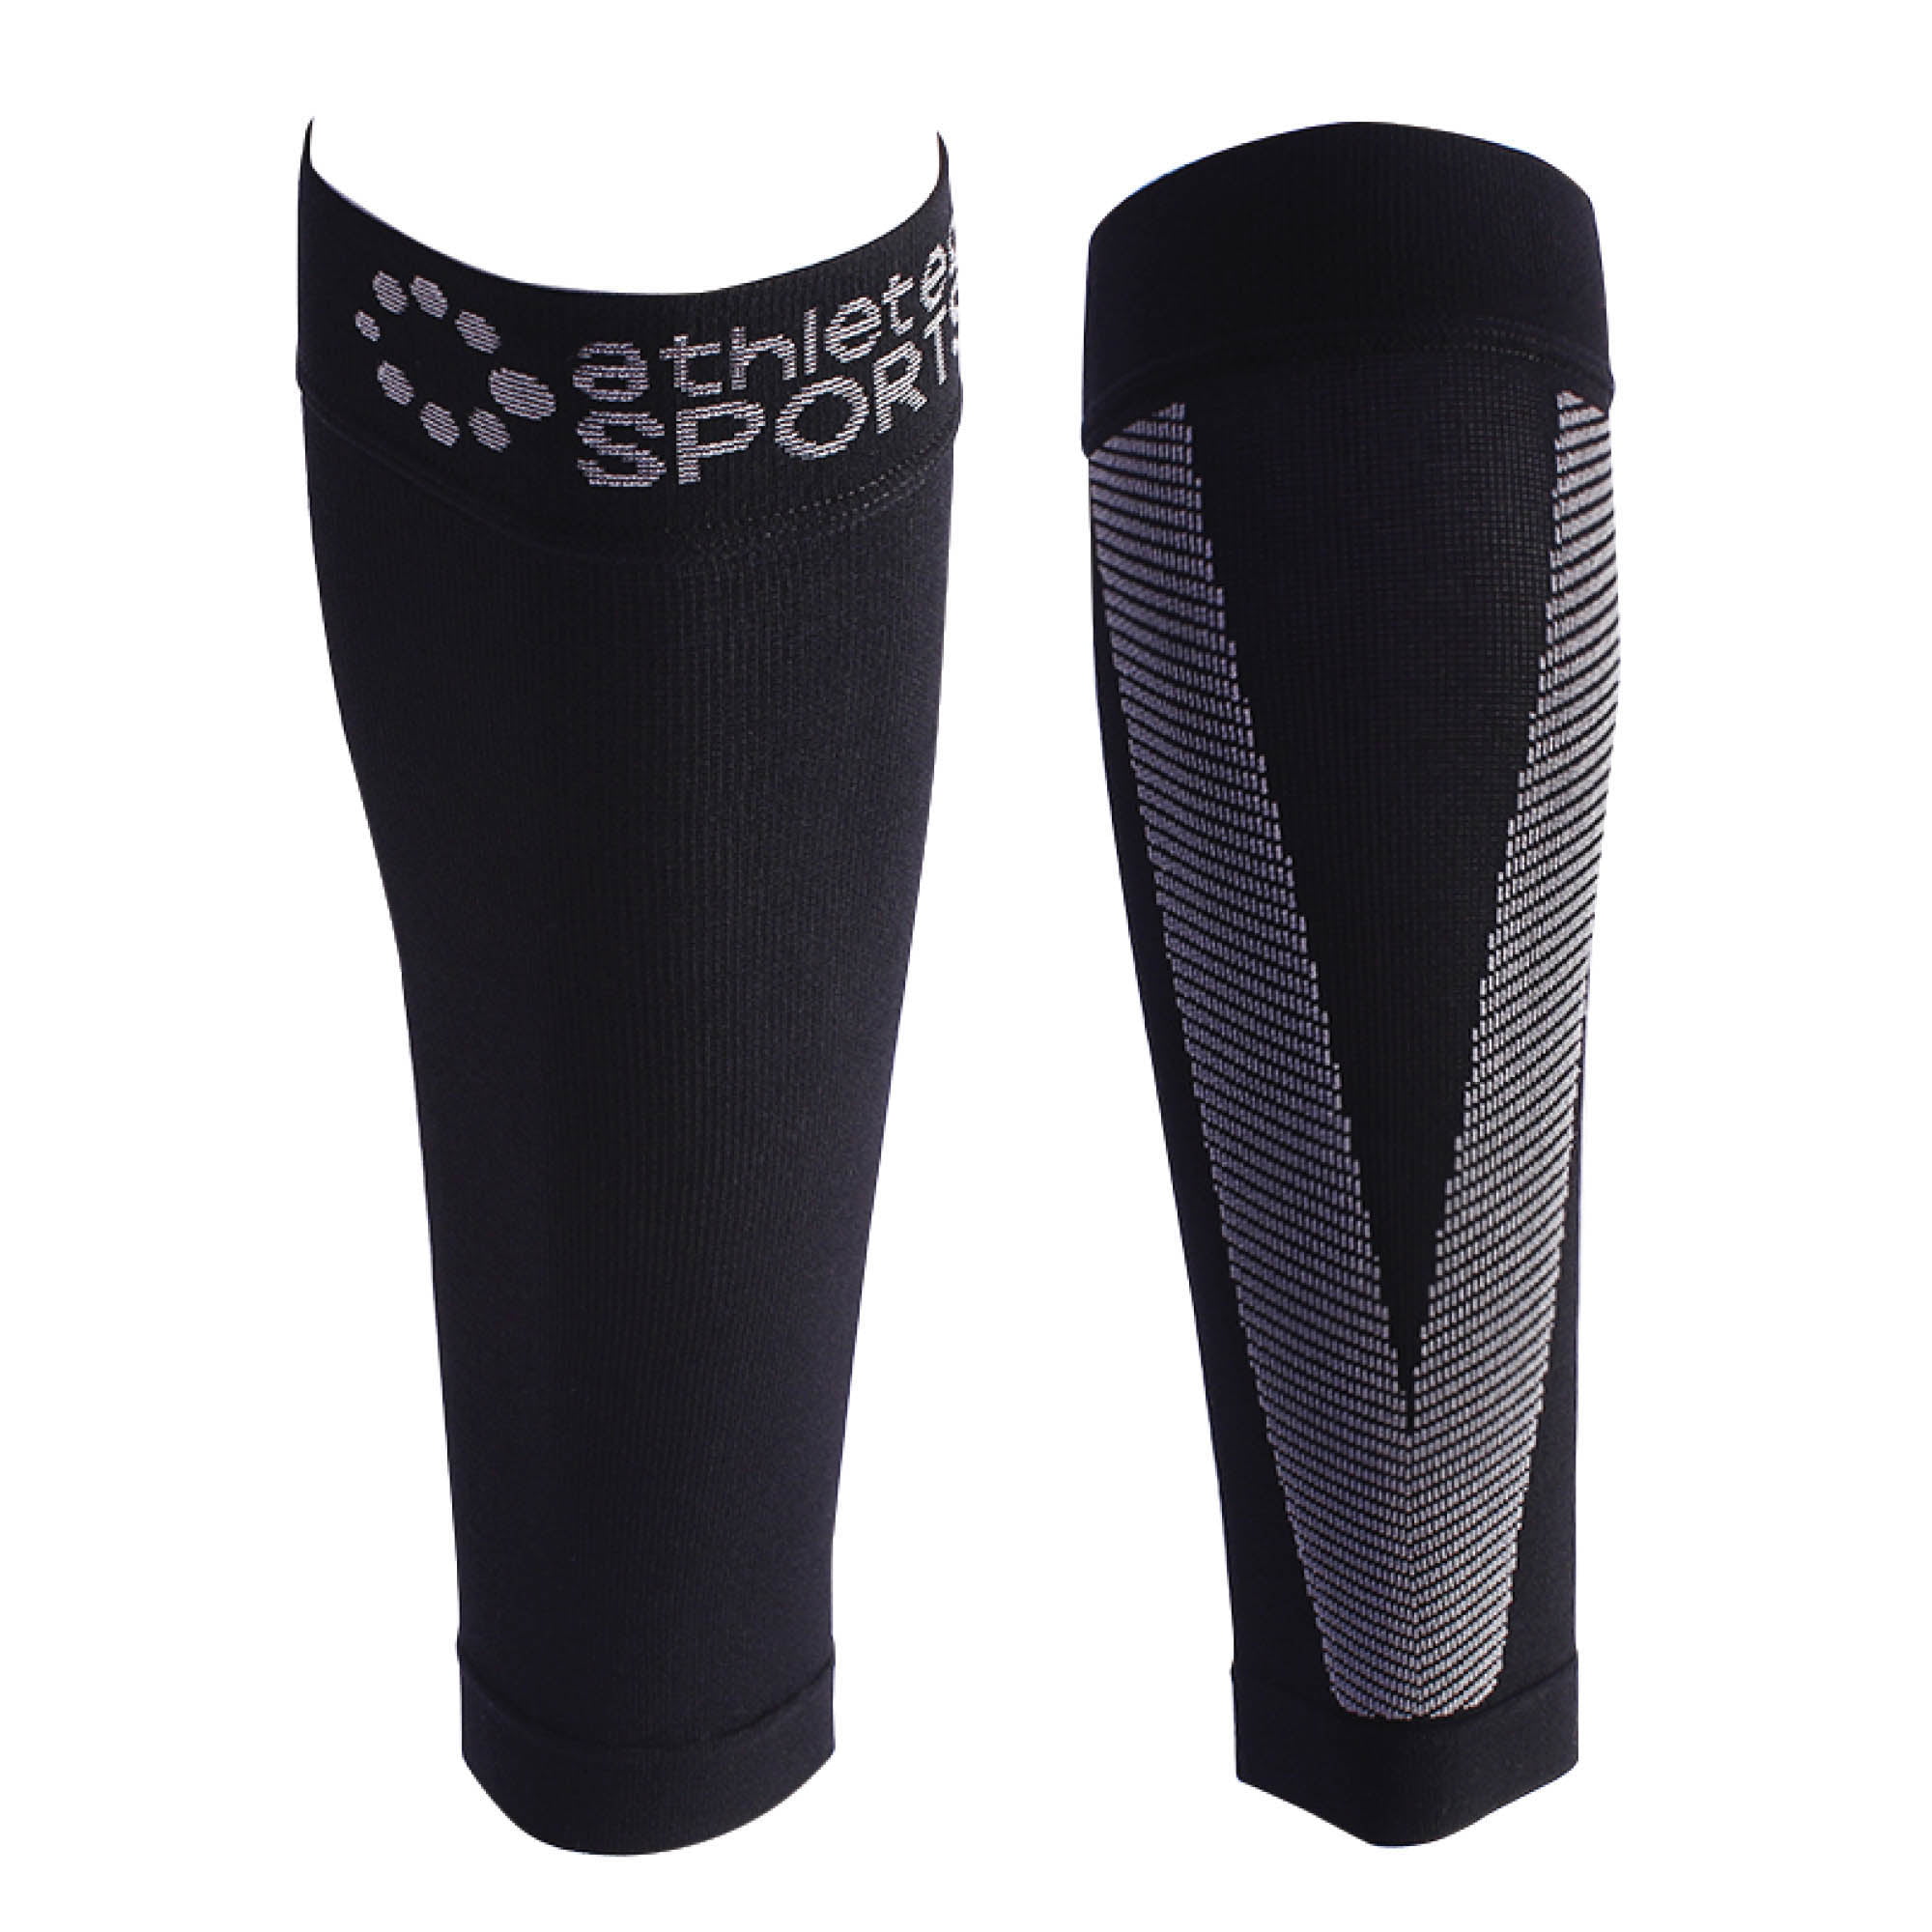 Compression Calf Sleeves Pair Shin Splints Running Support Guards Socks Cycling. 